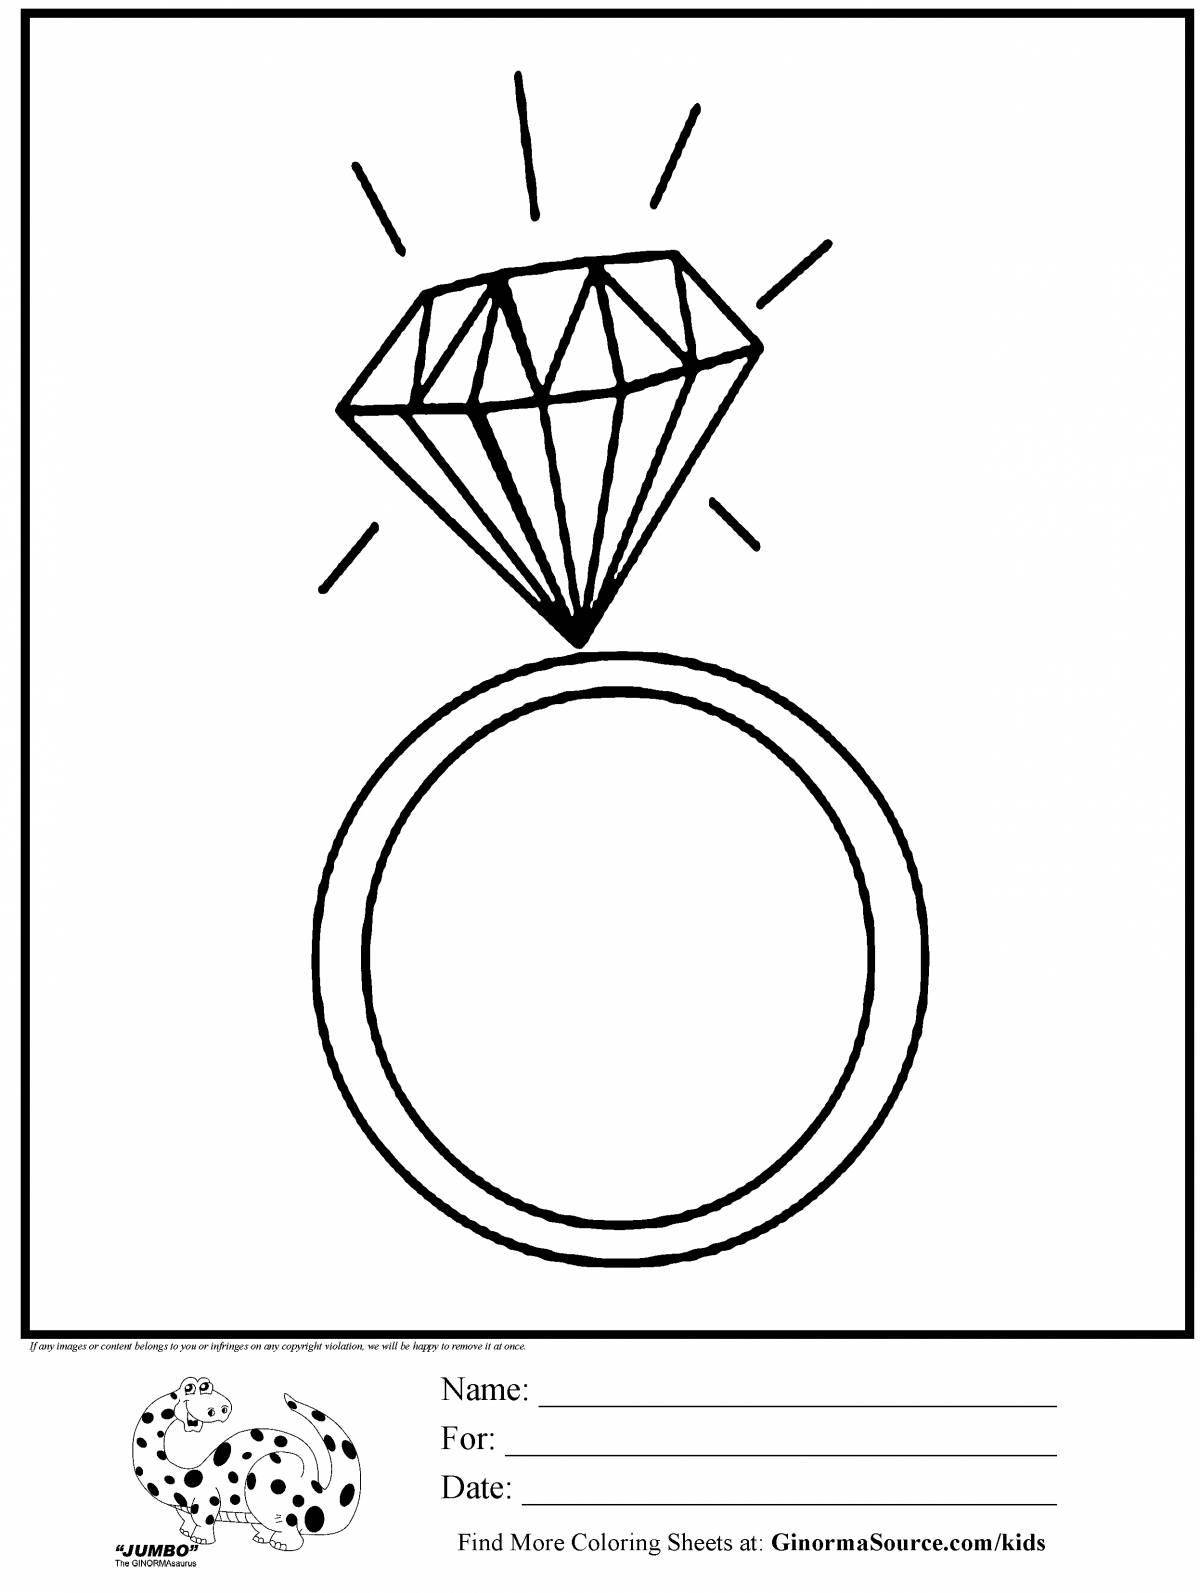 Delightful diamond ring coloring